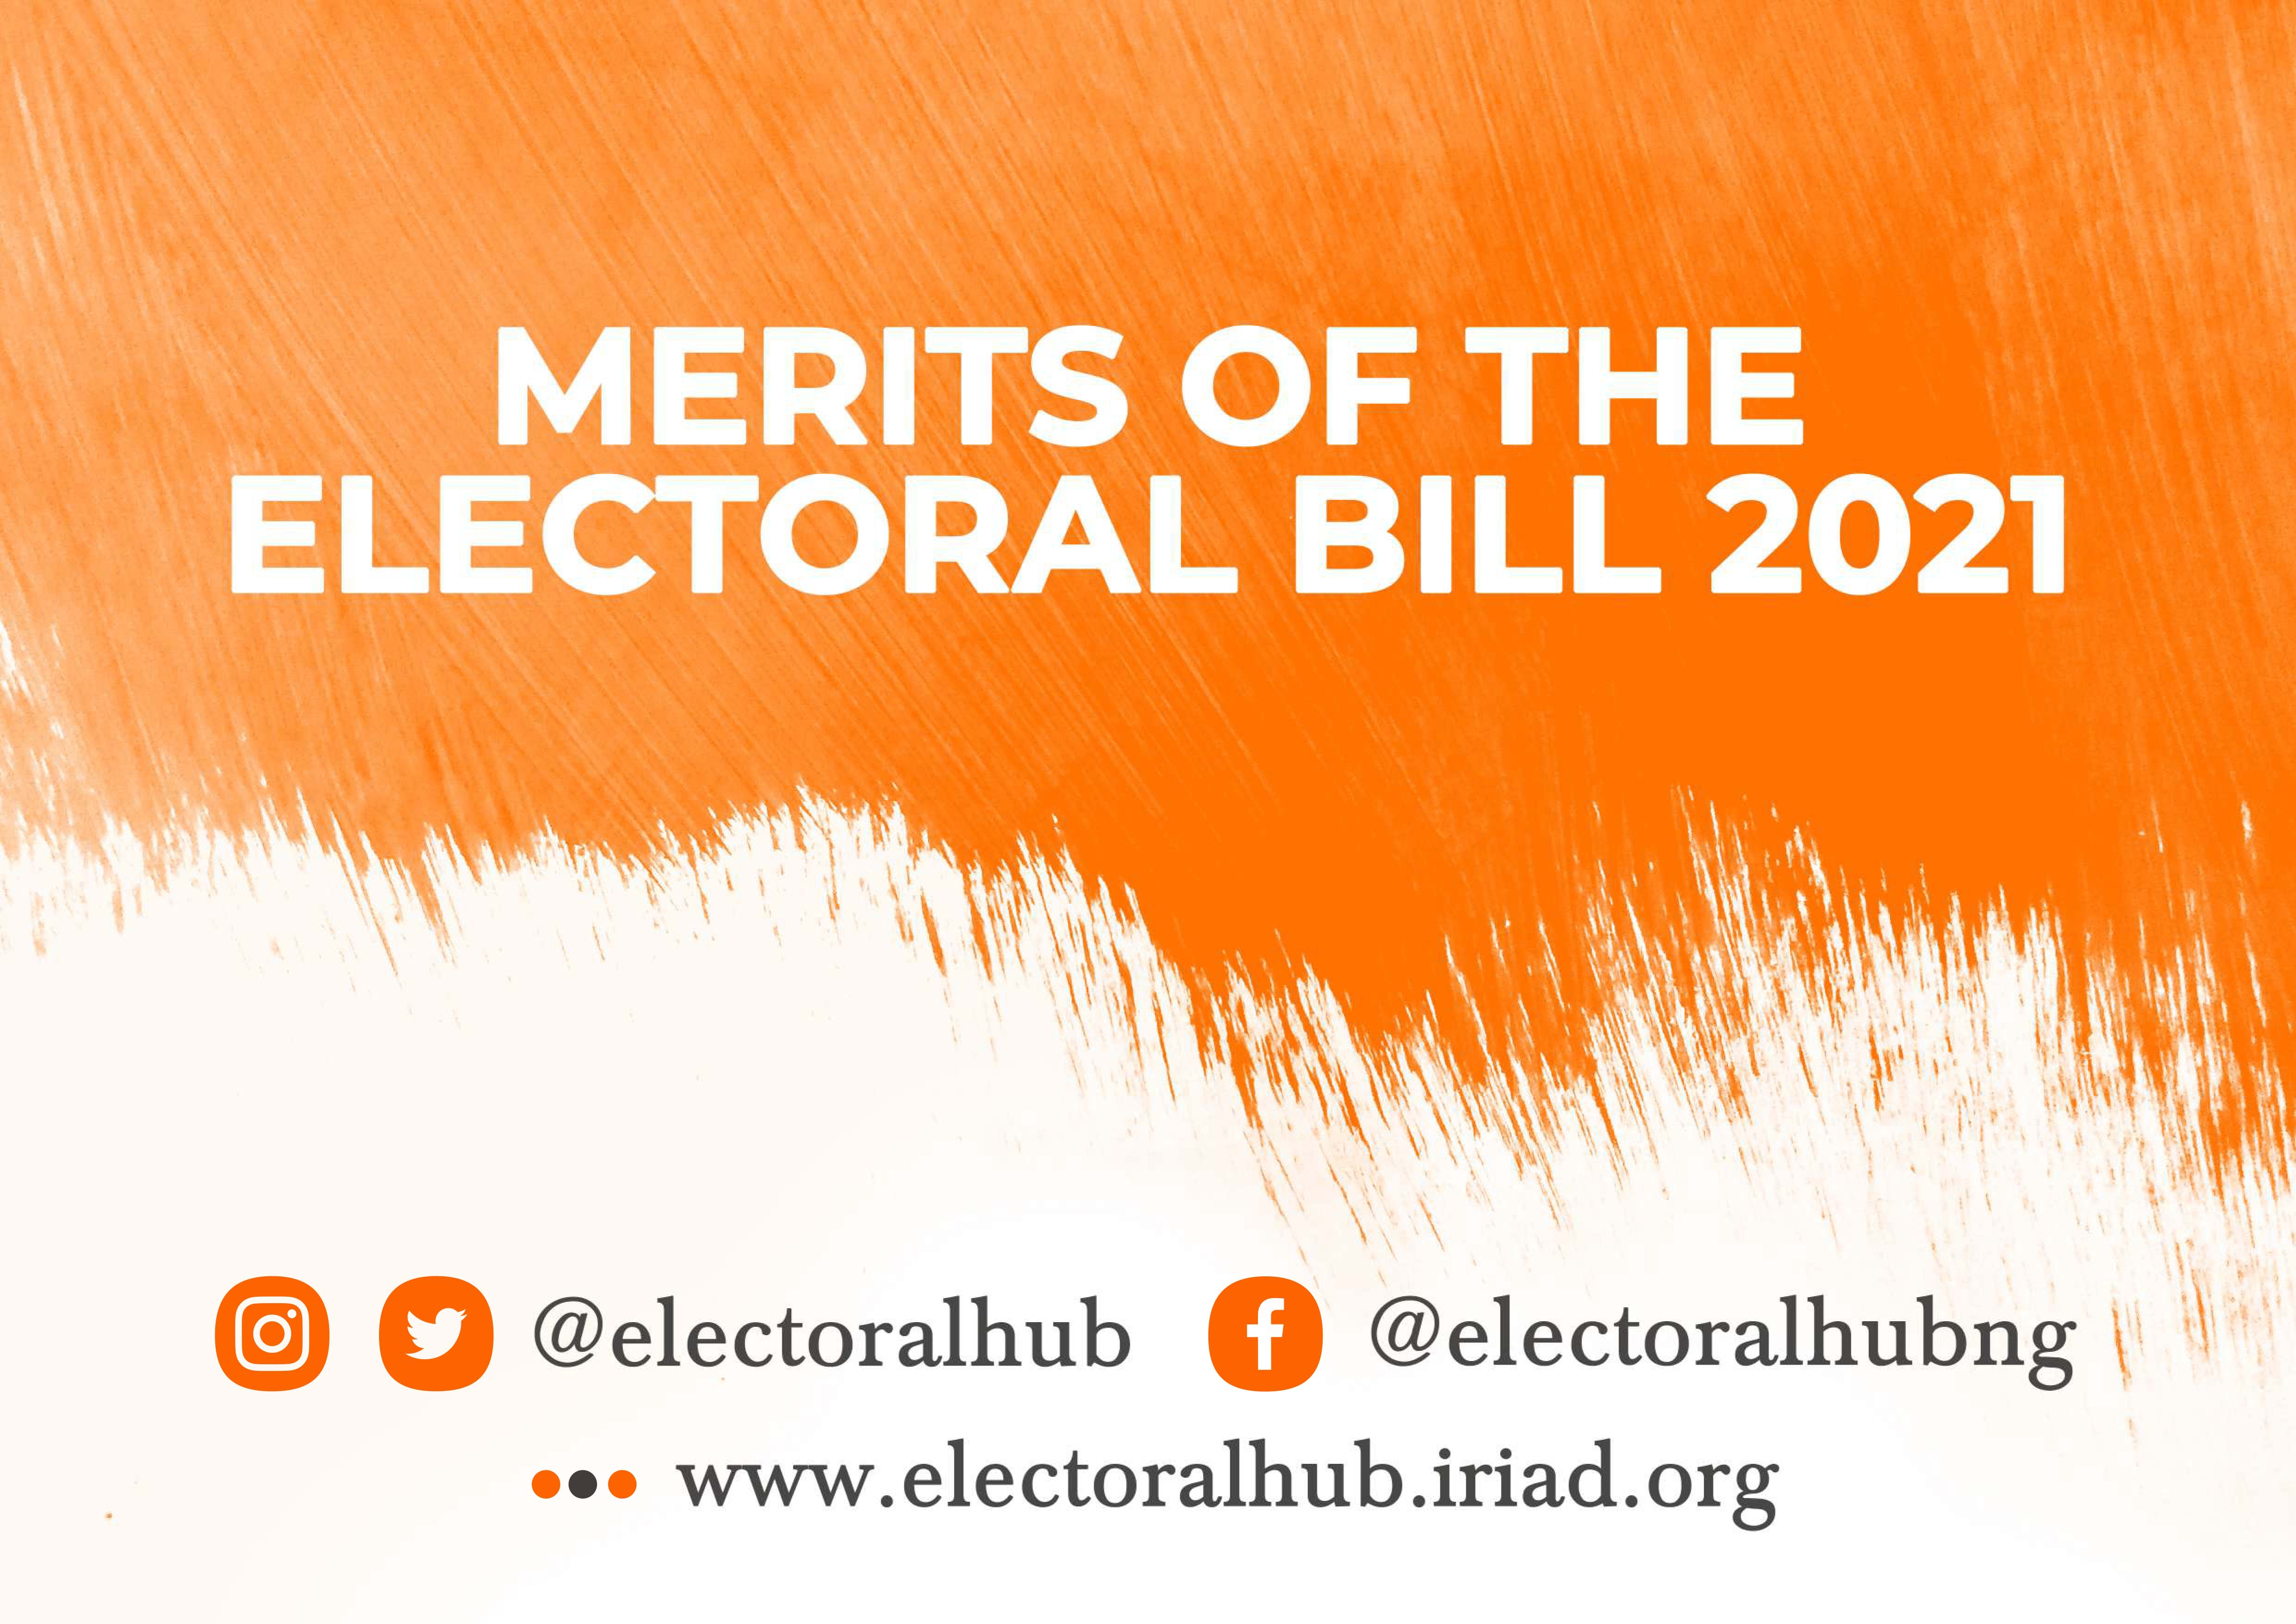 Merits of the Electoral Bill 2021